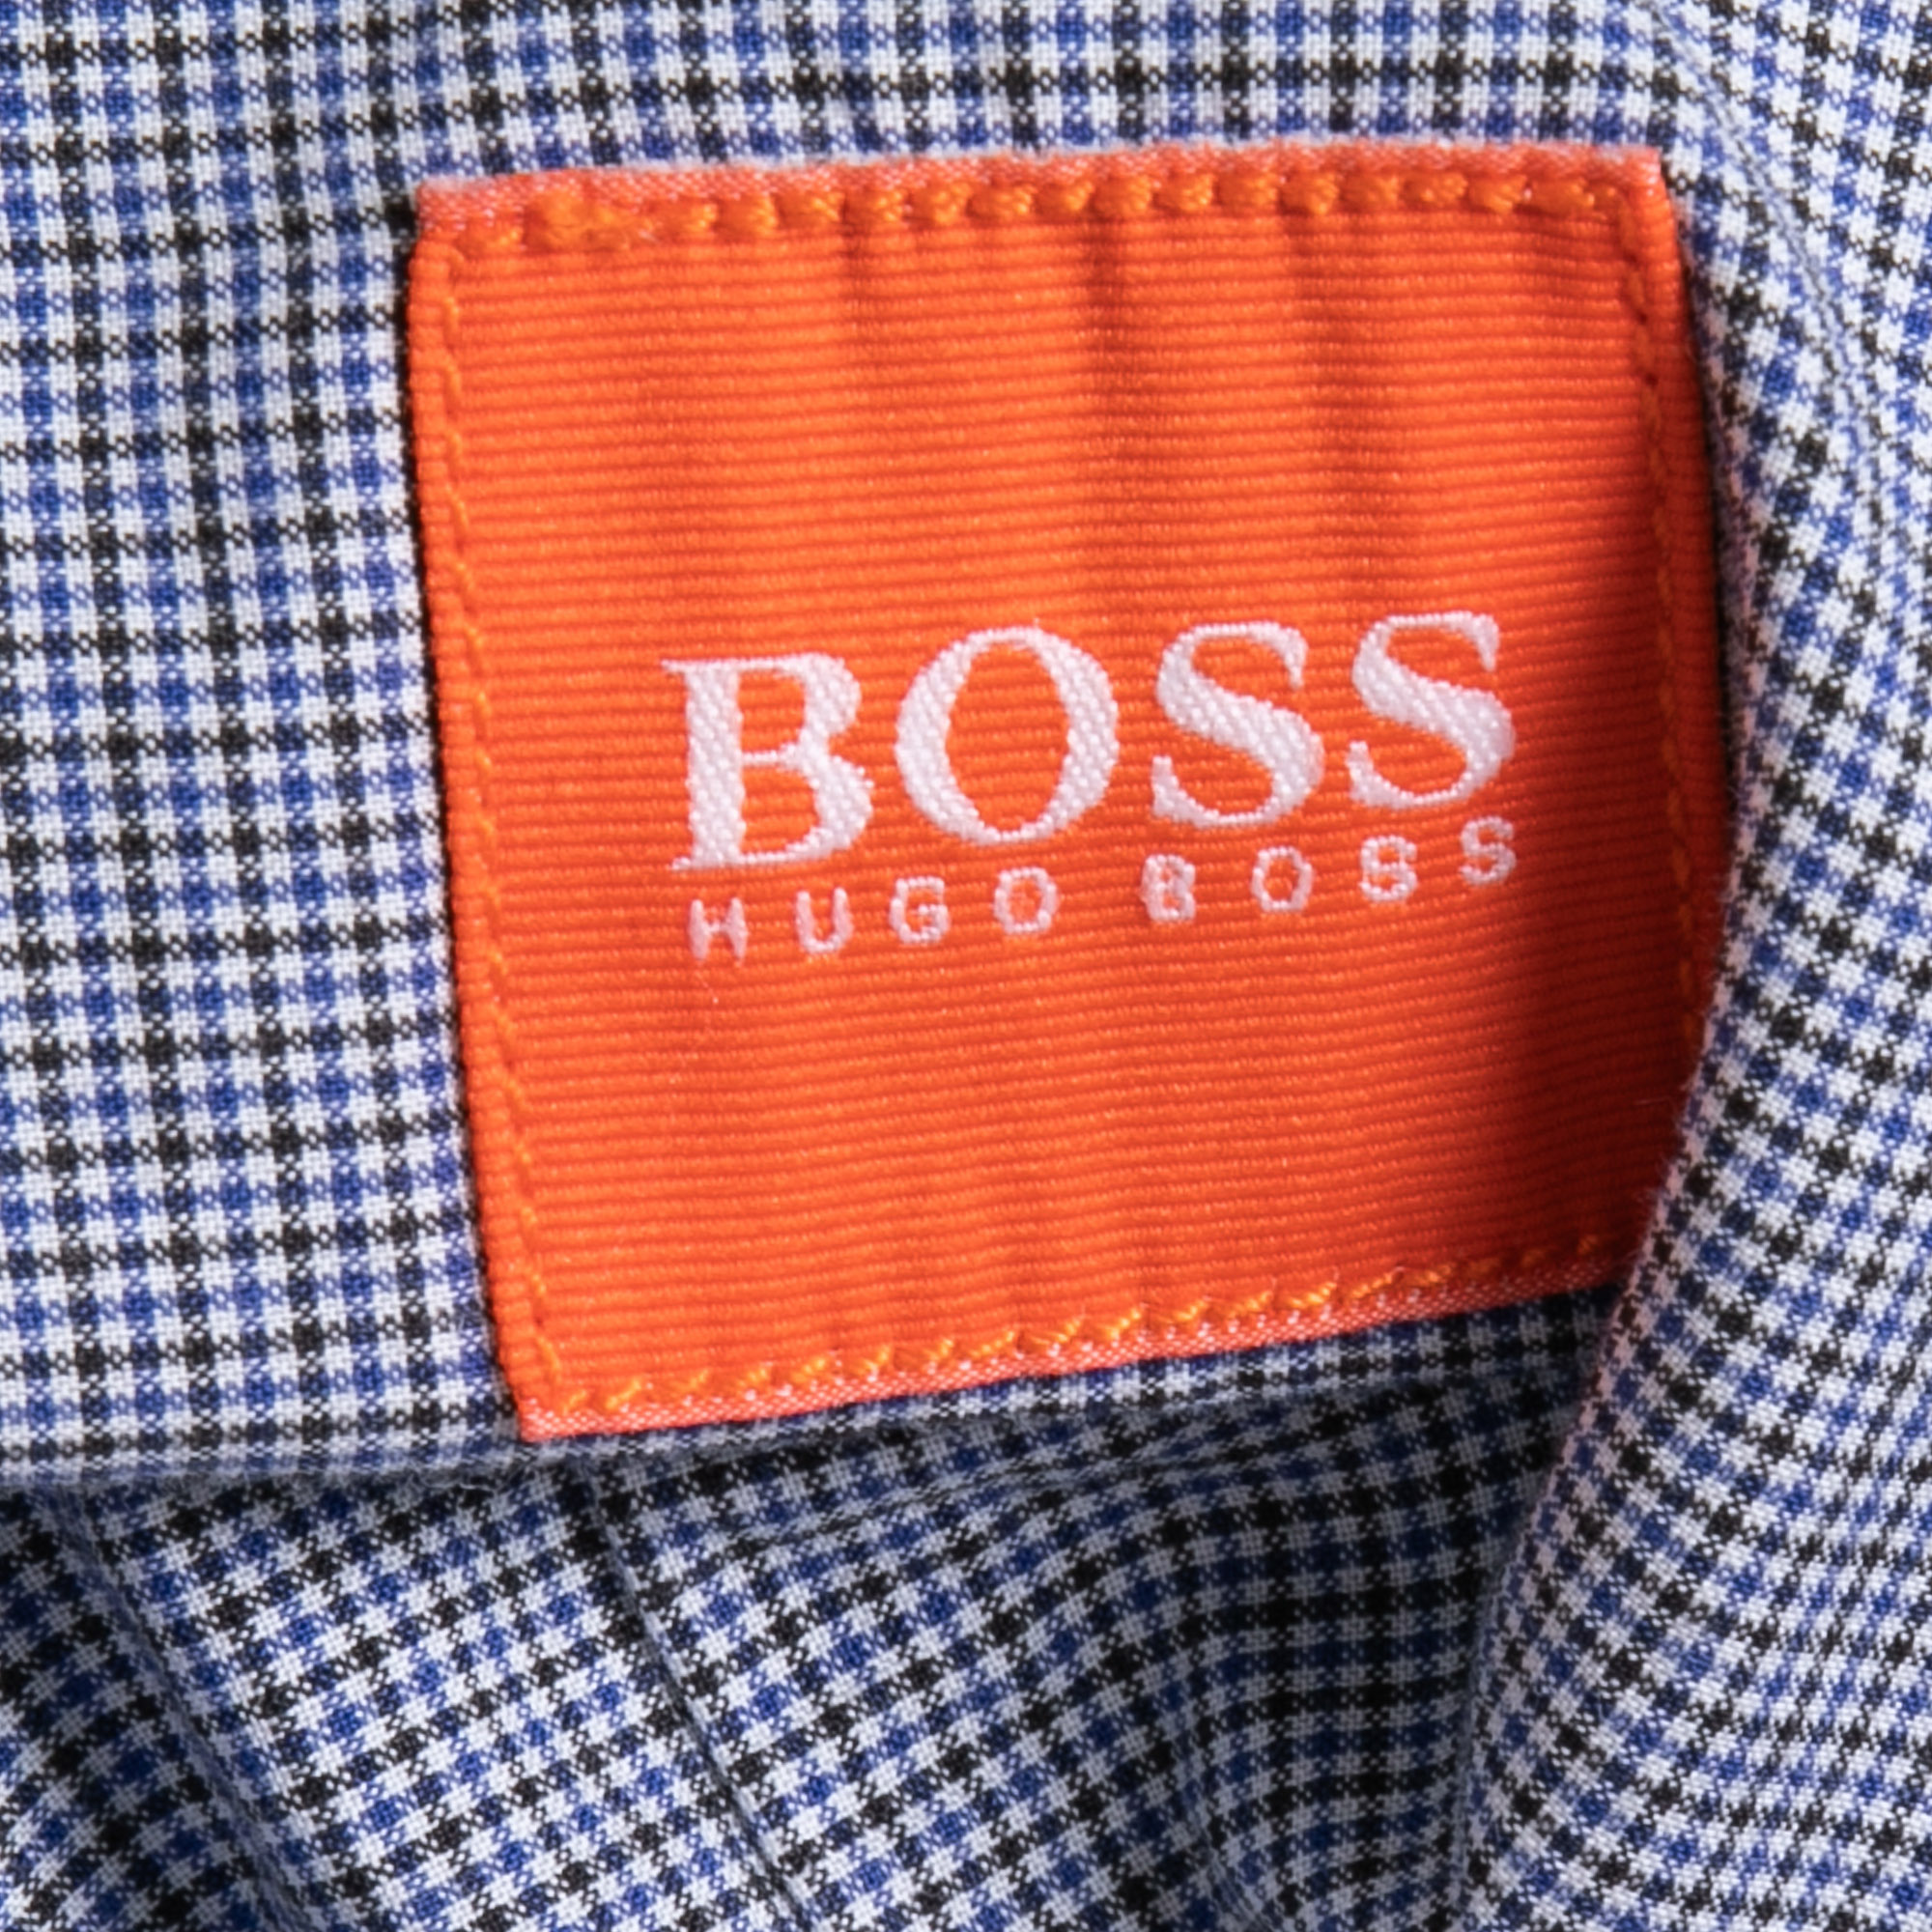 Boss Orange By Hugo Boss Blue Micro Checked Cotton Button Front Full Sleeve Shirt XXXL